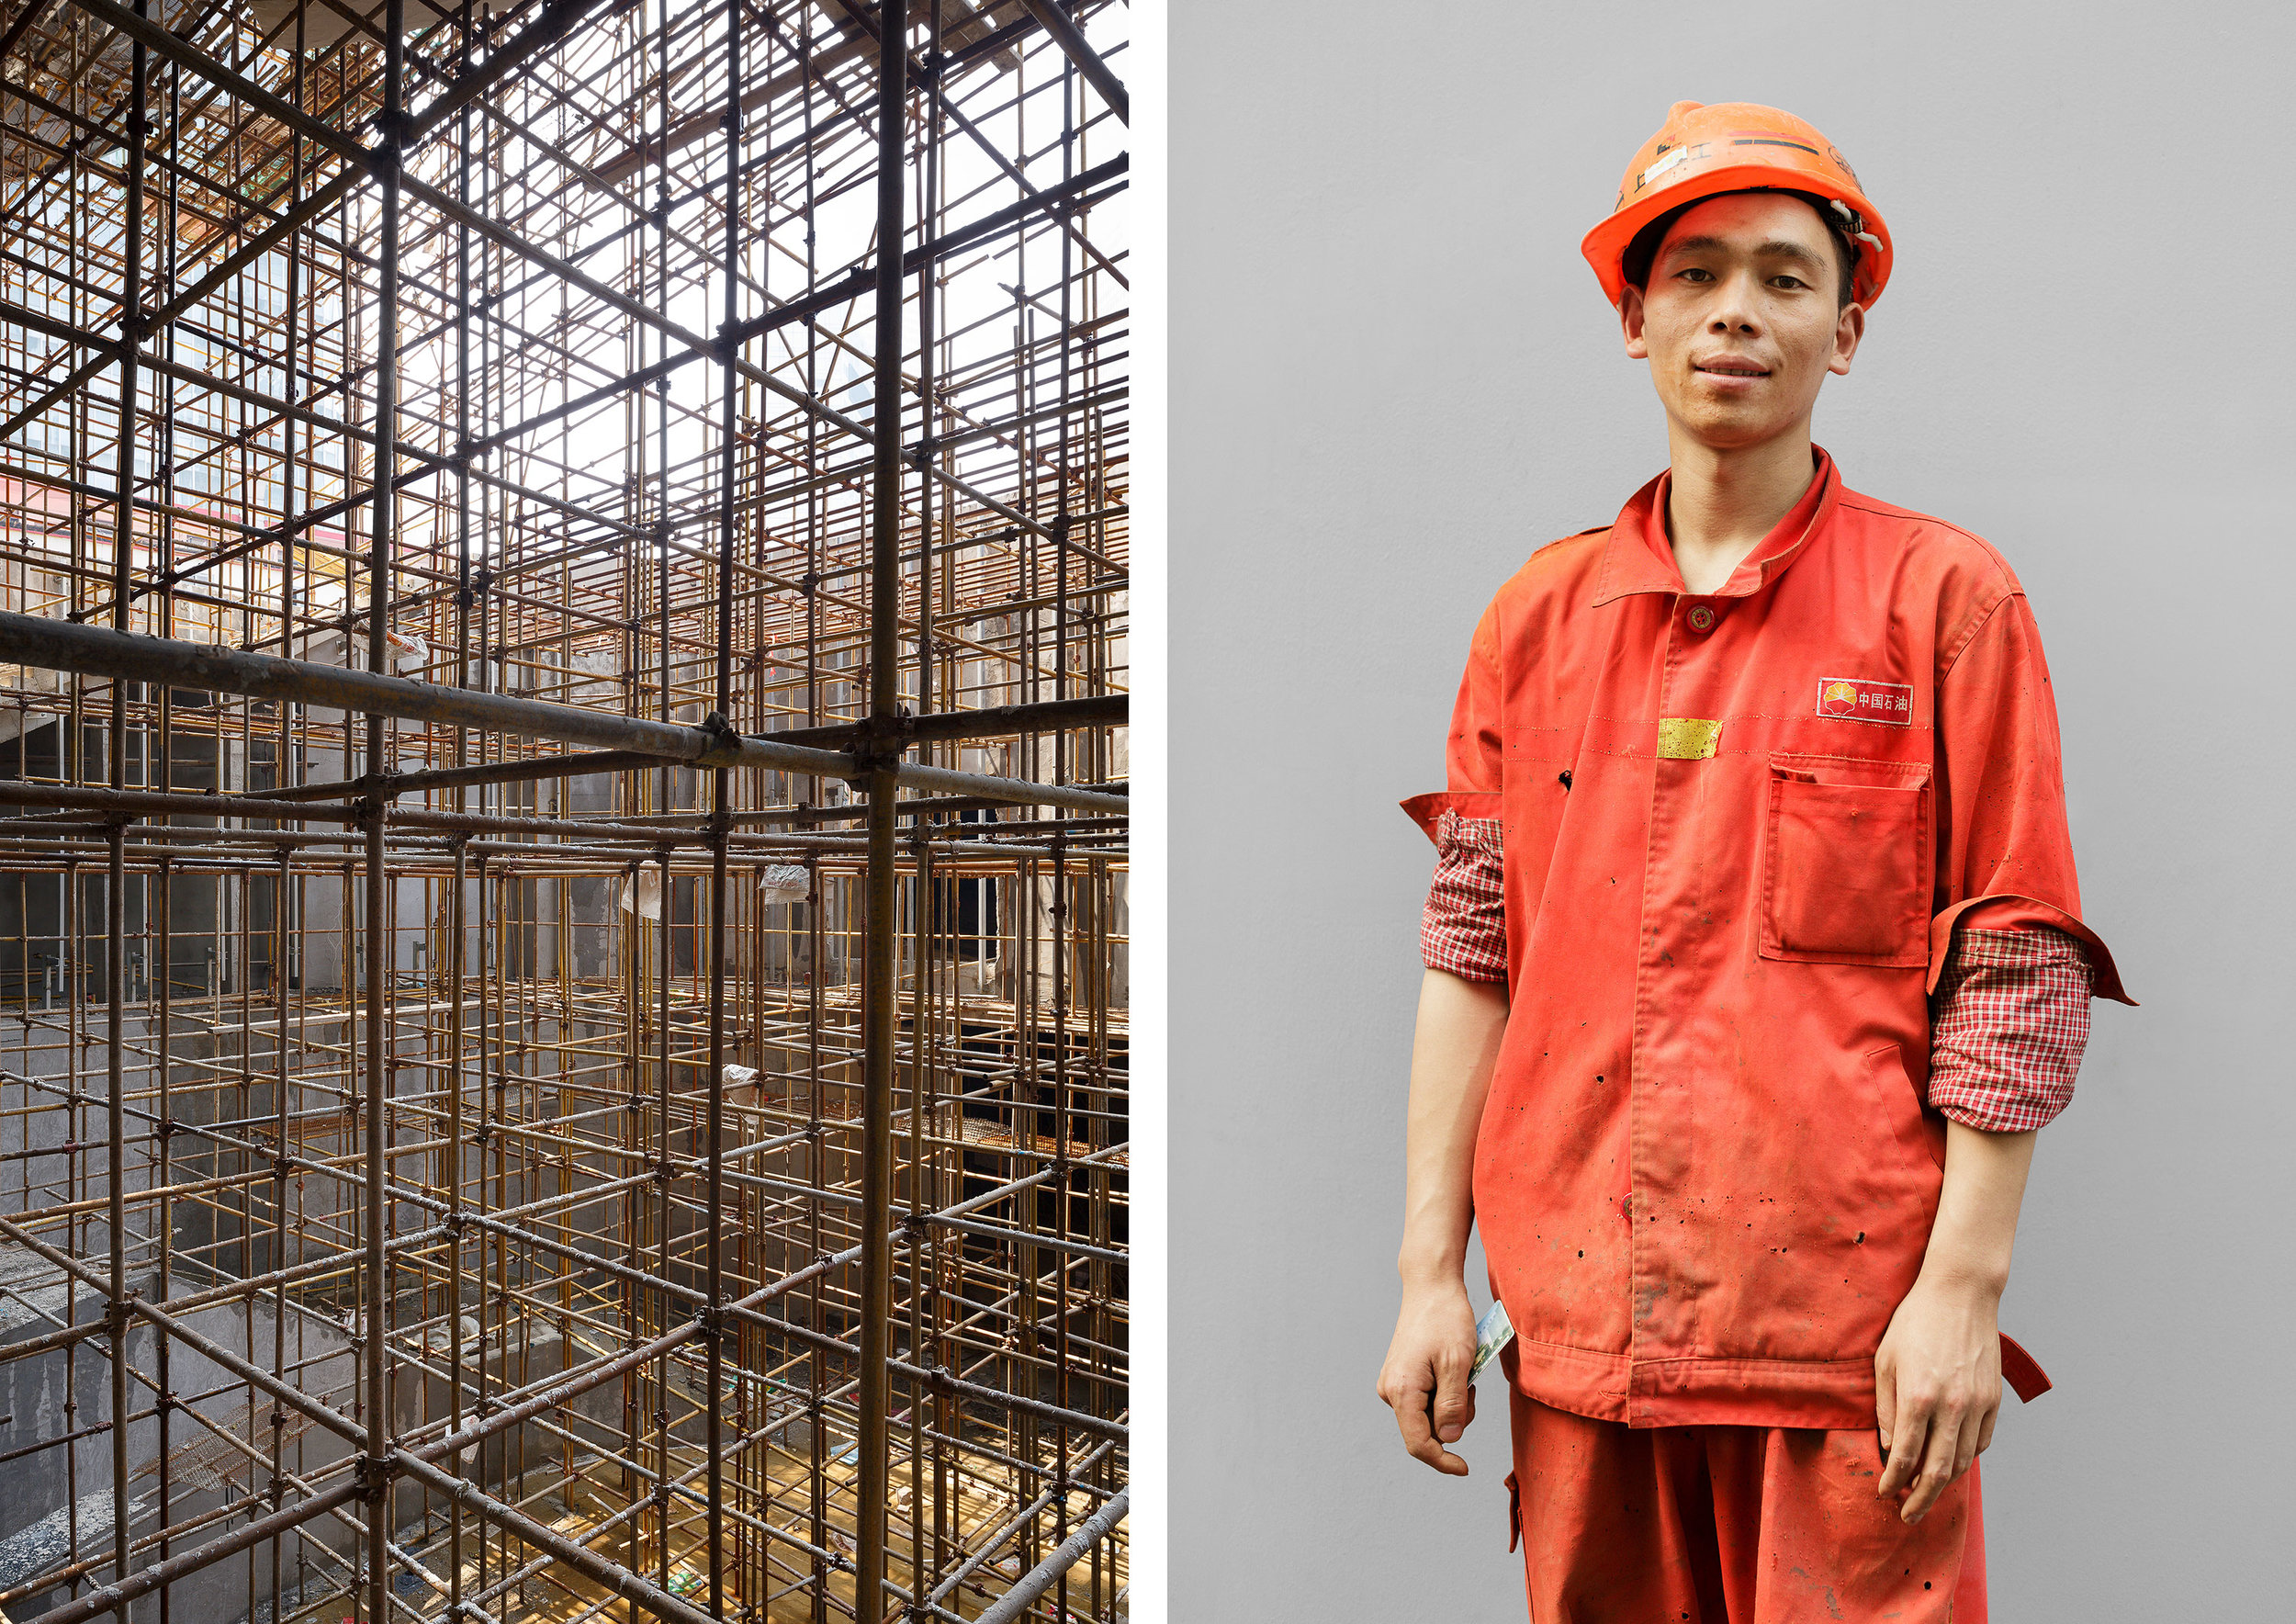 Shanghai_Tower-workers-and-building18.jpg